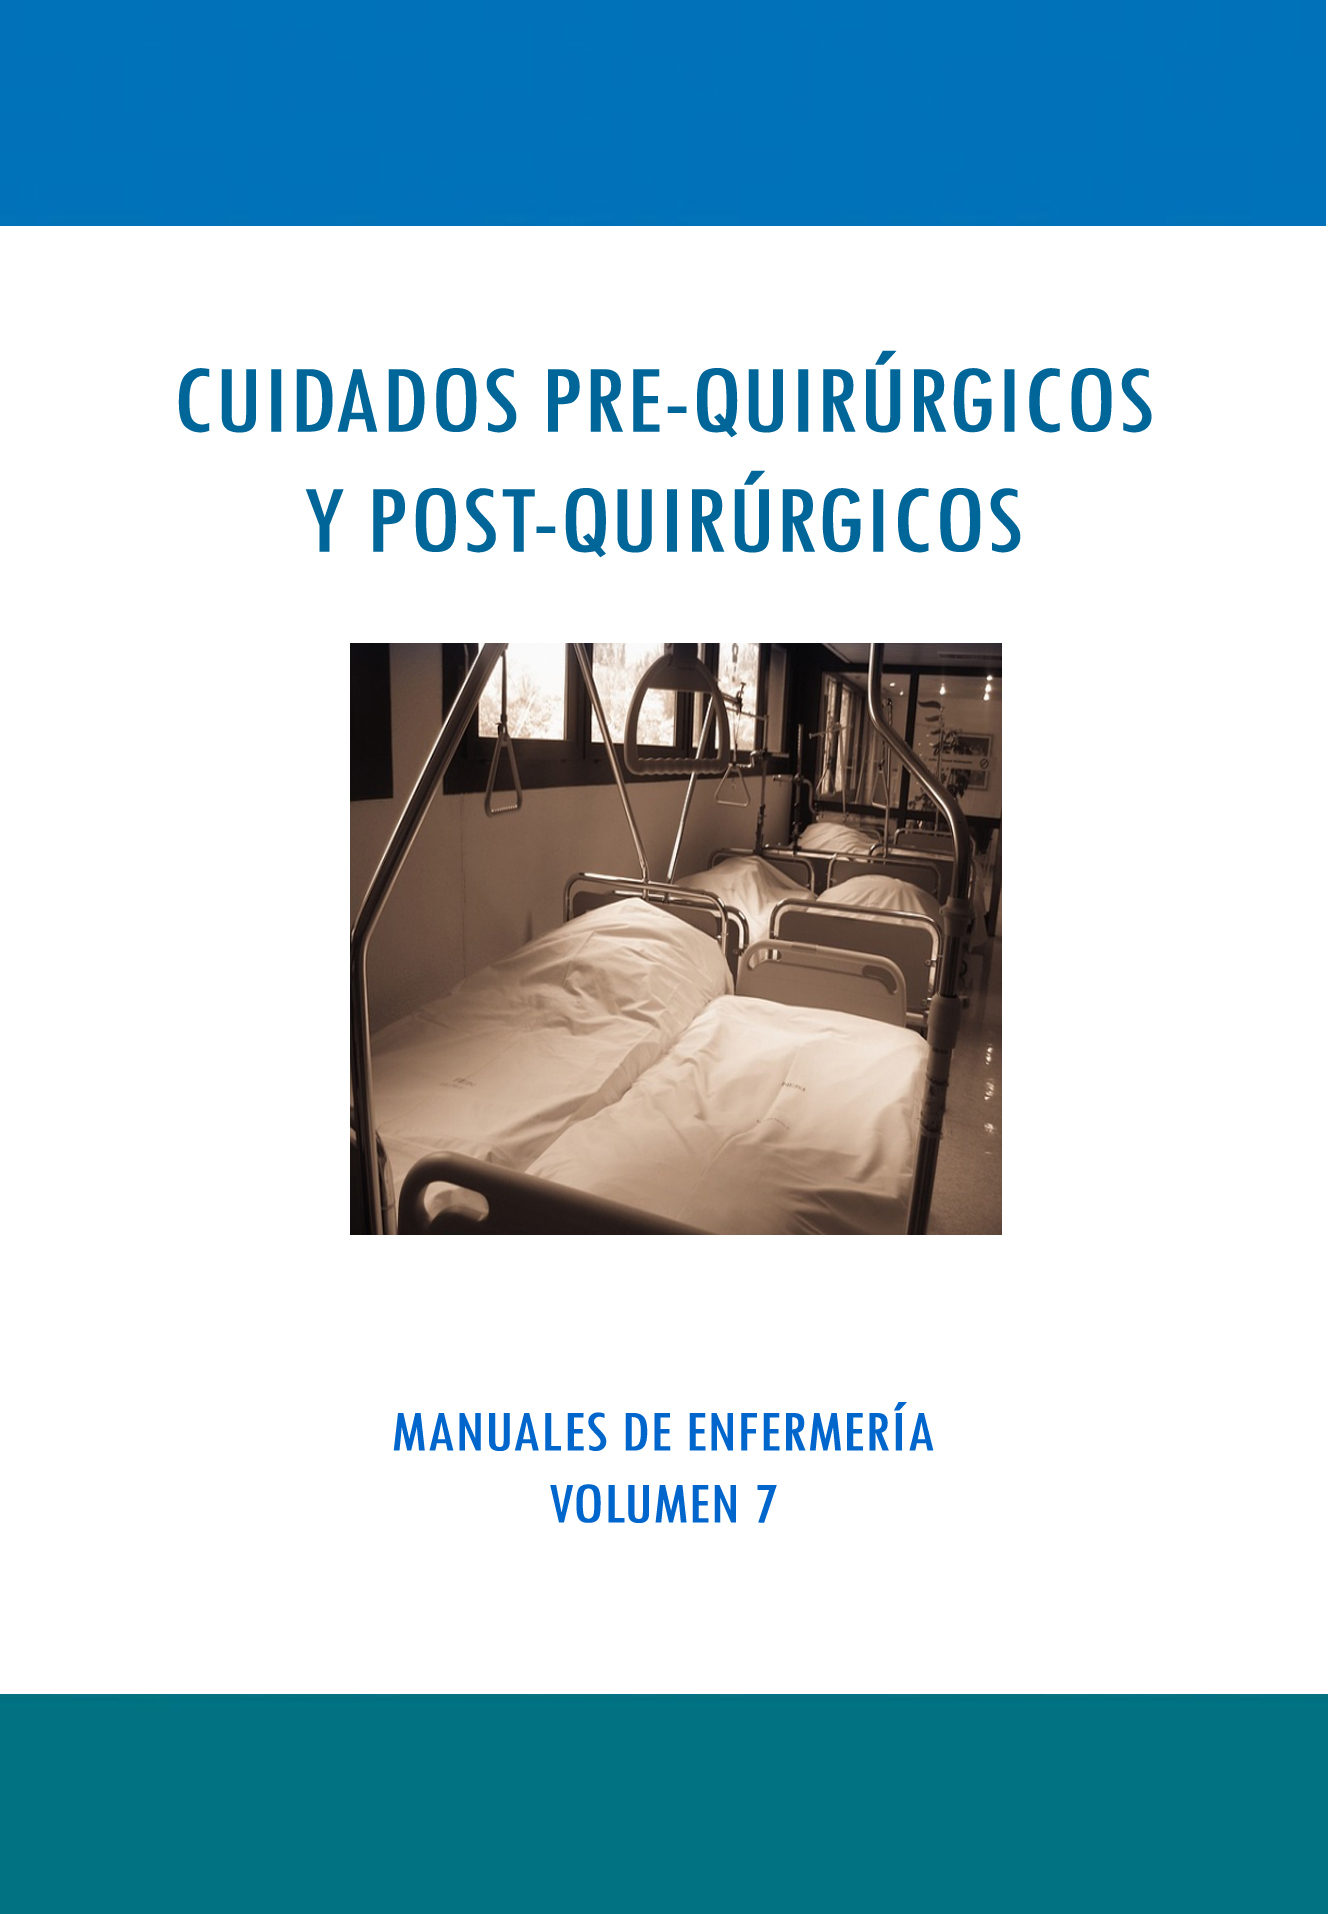 Download libros tecnicas quirurgicas pdf software free